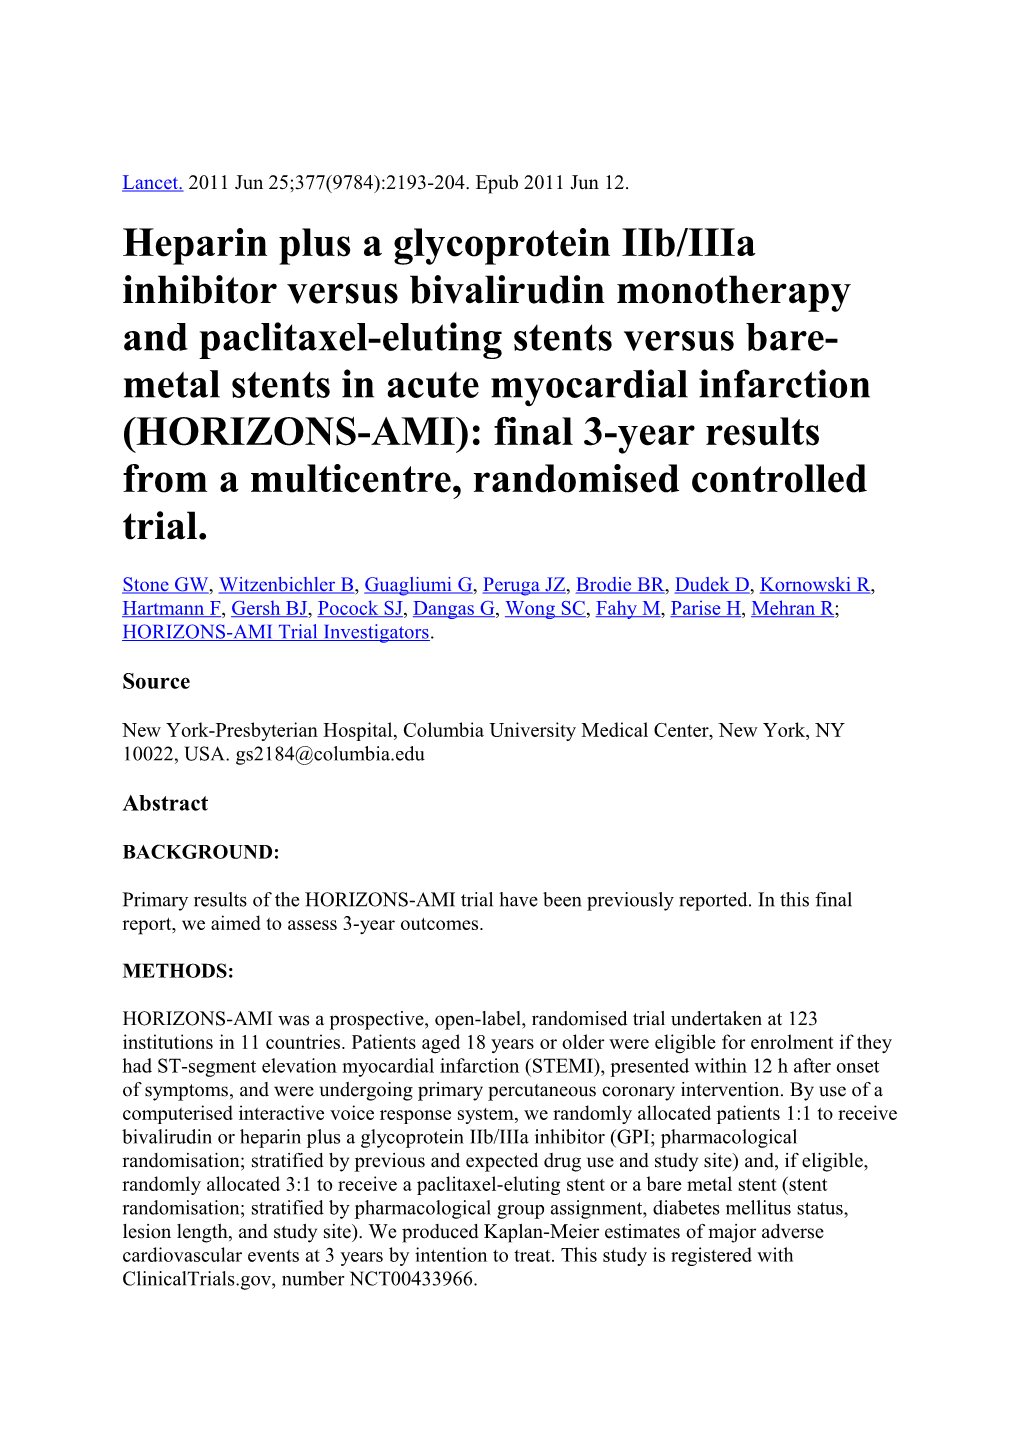 Heparin Plus a Glycoprotein Iib/Iiia Inhibitor Versus Bivalirudin Monotherapy And